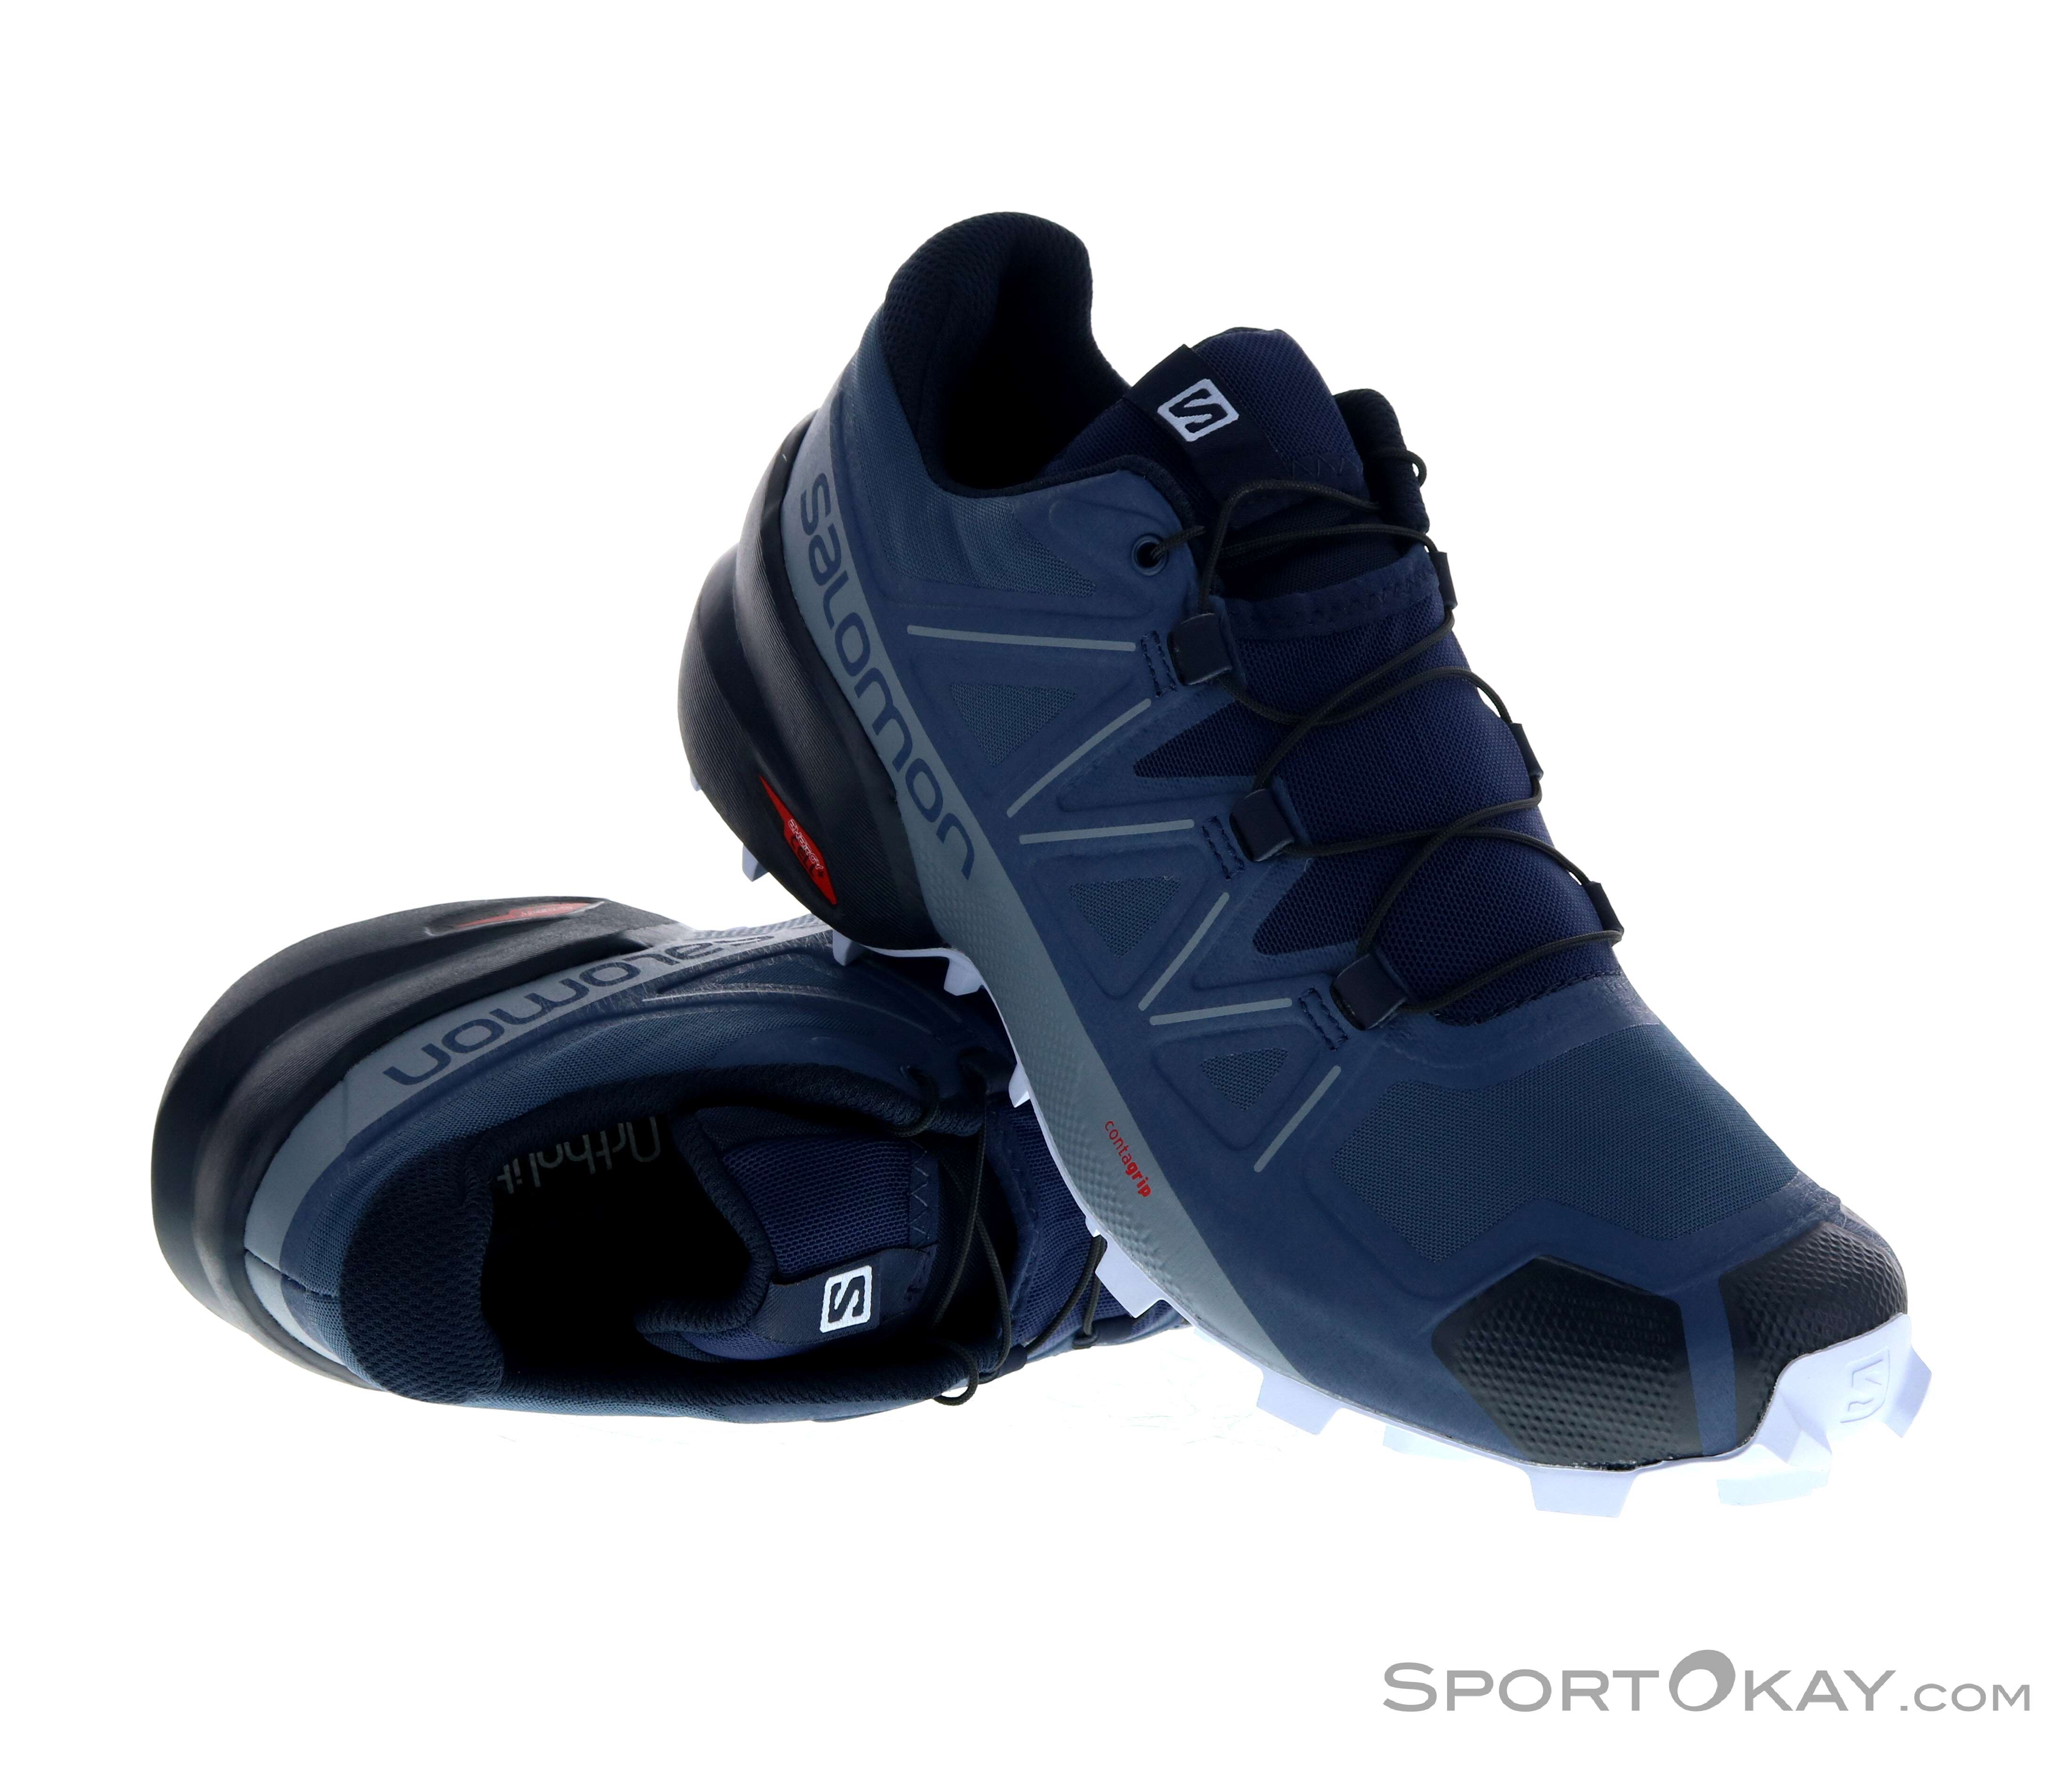 Salomon Speedcross 5 Wide Trail Running Shoes Blue